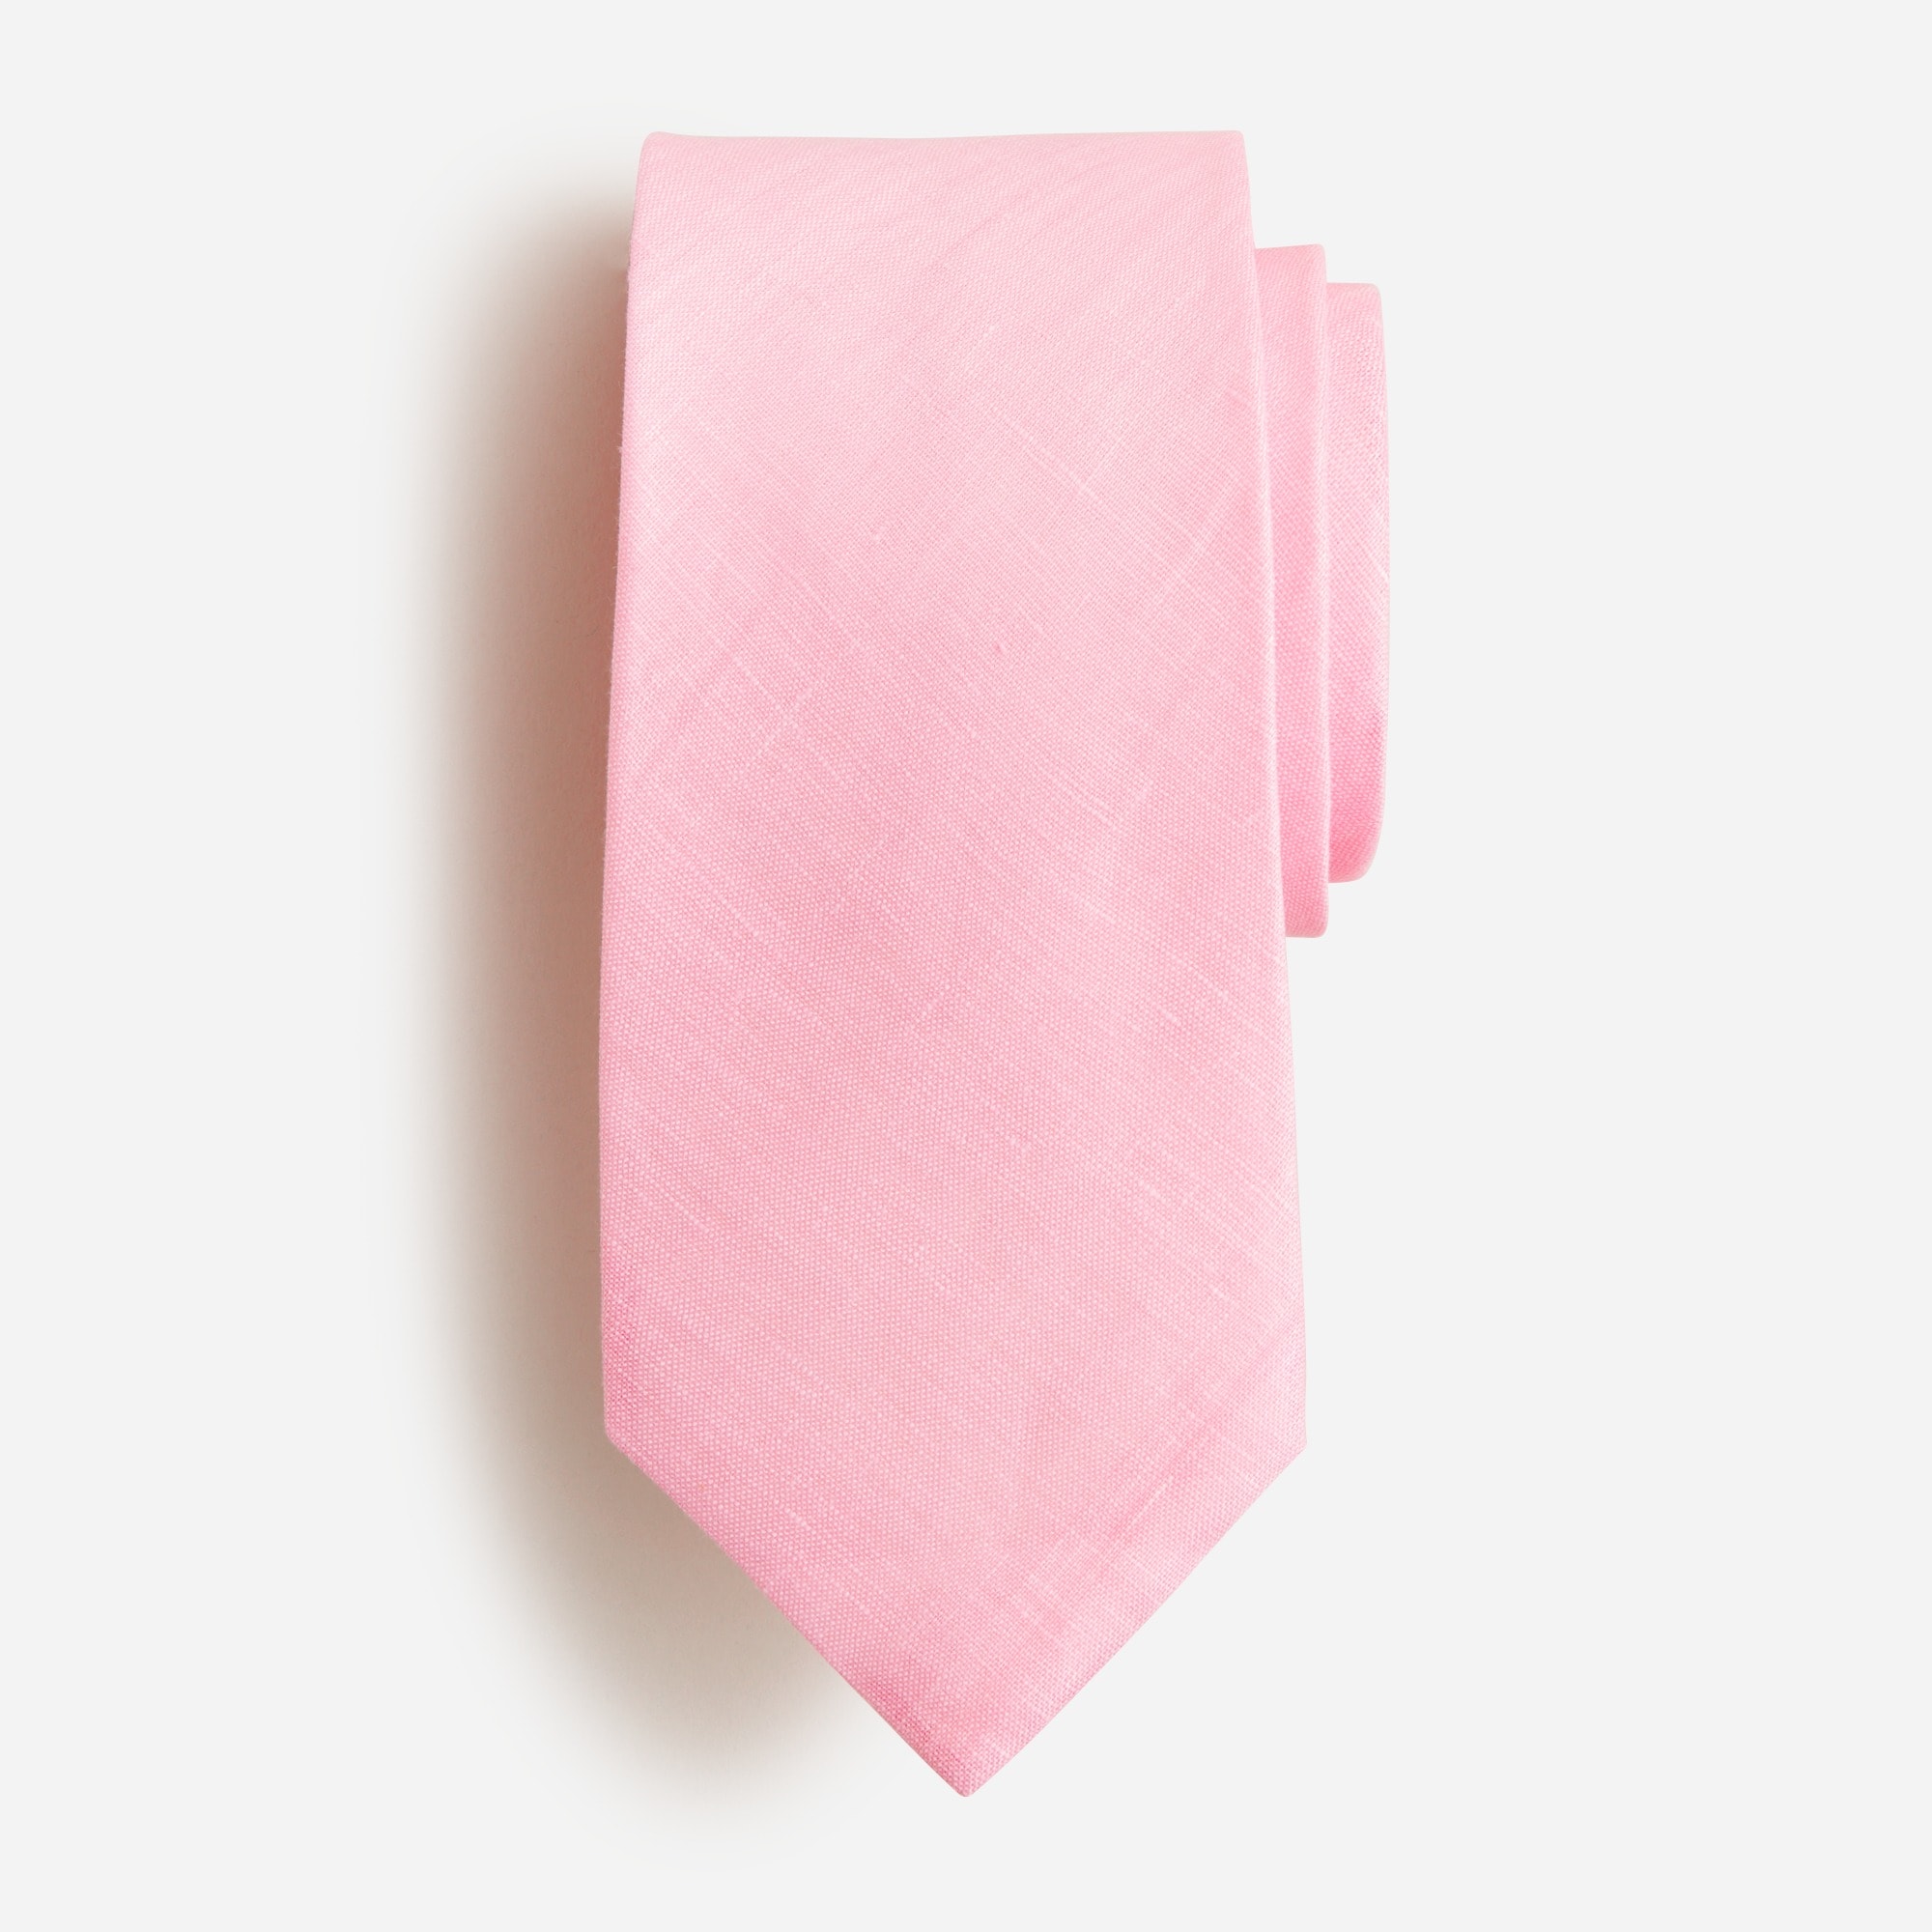  English linen tie